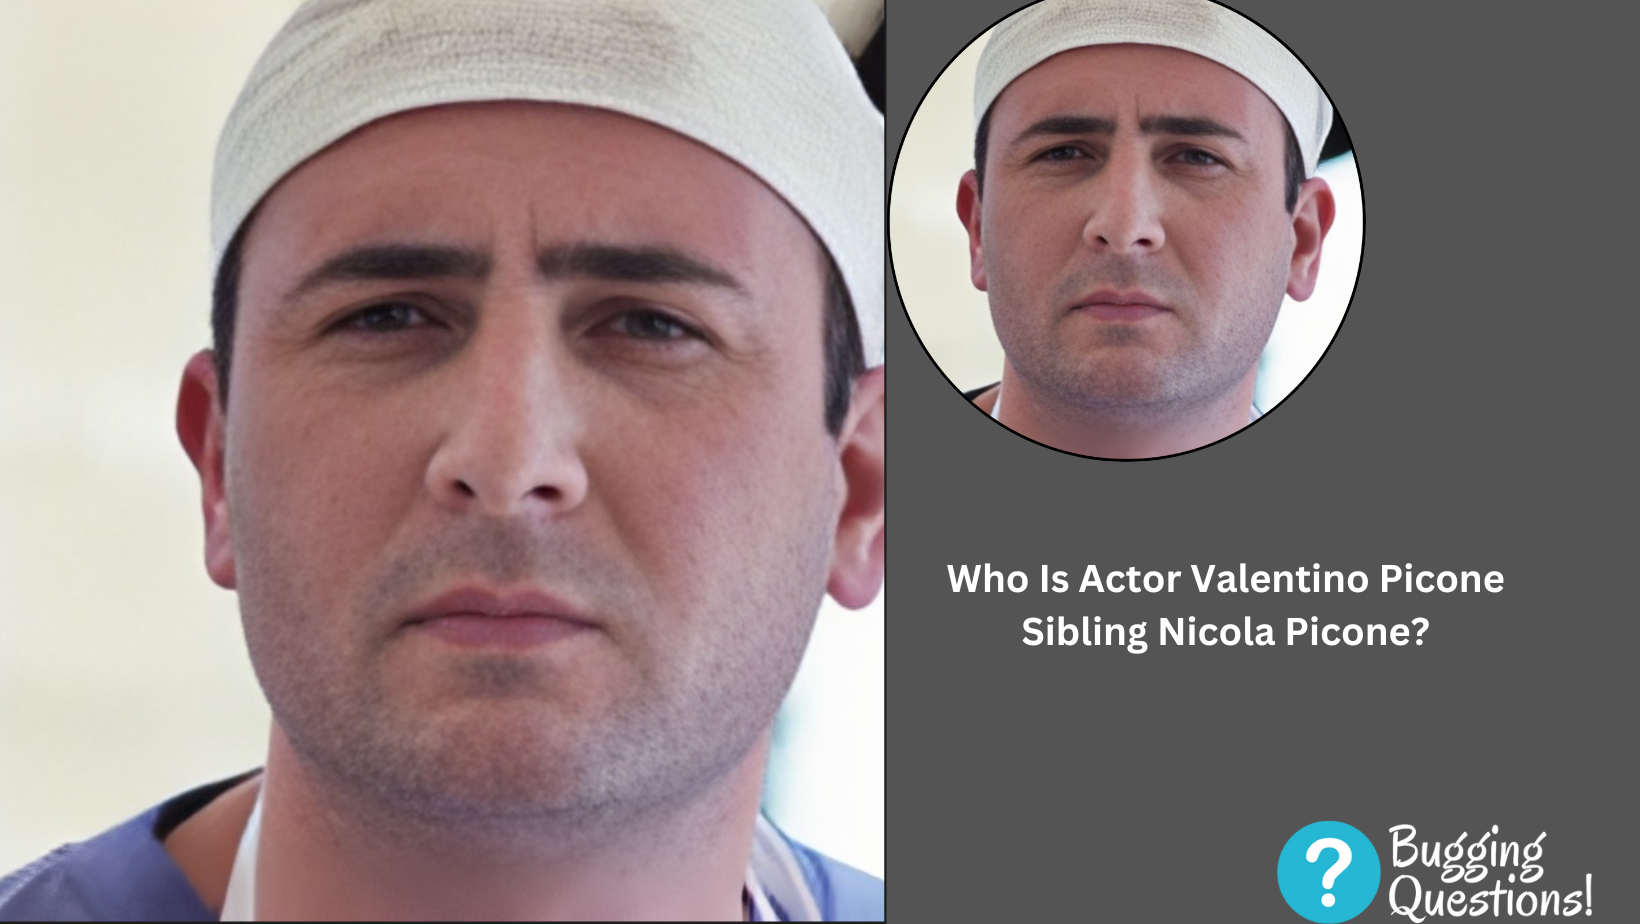 Who Is Actor Valentino Picone Sibling Nicola Picone?